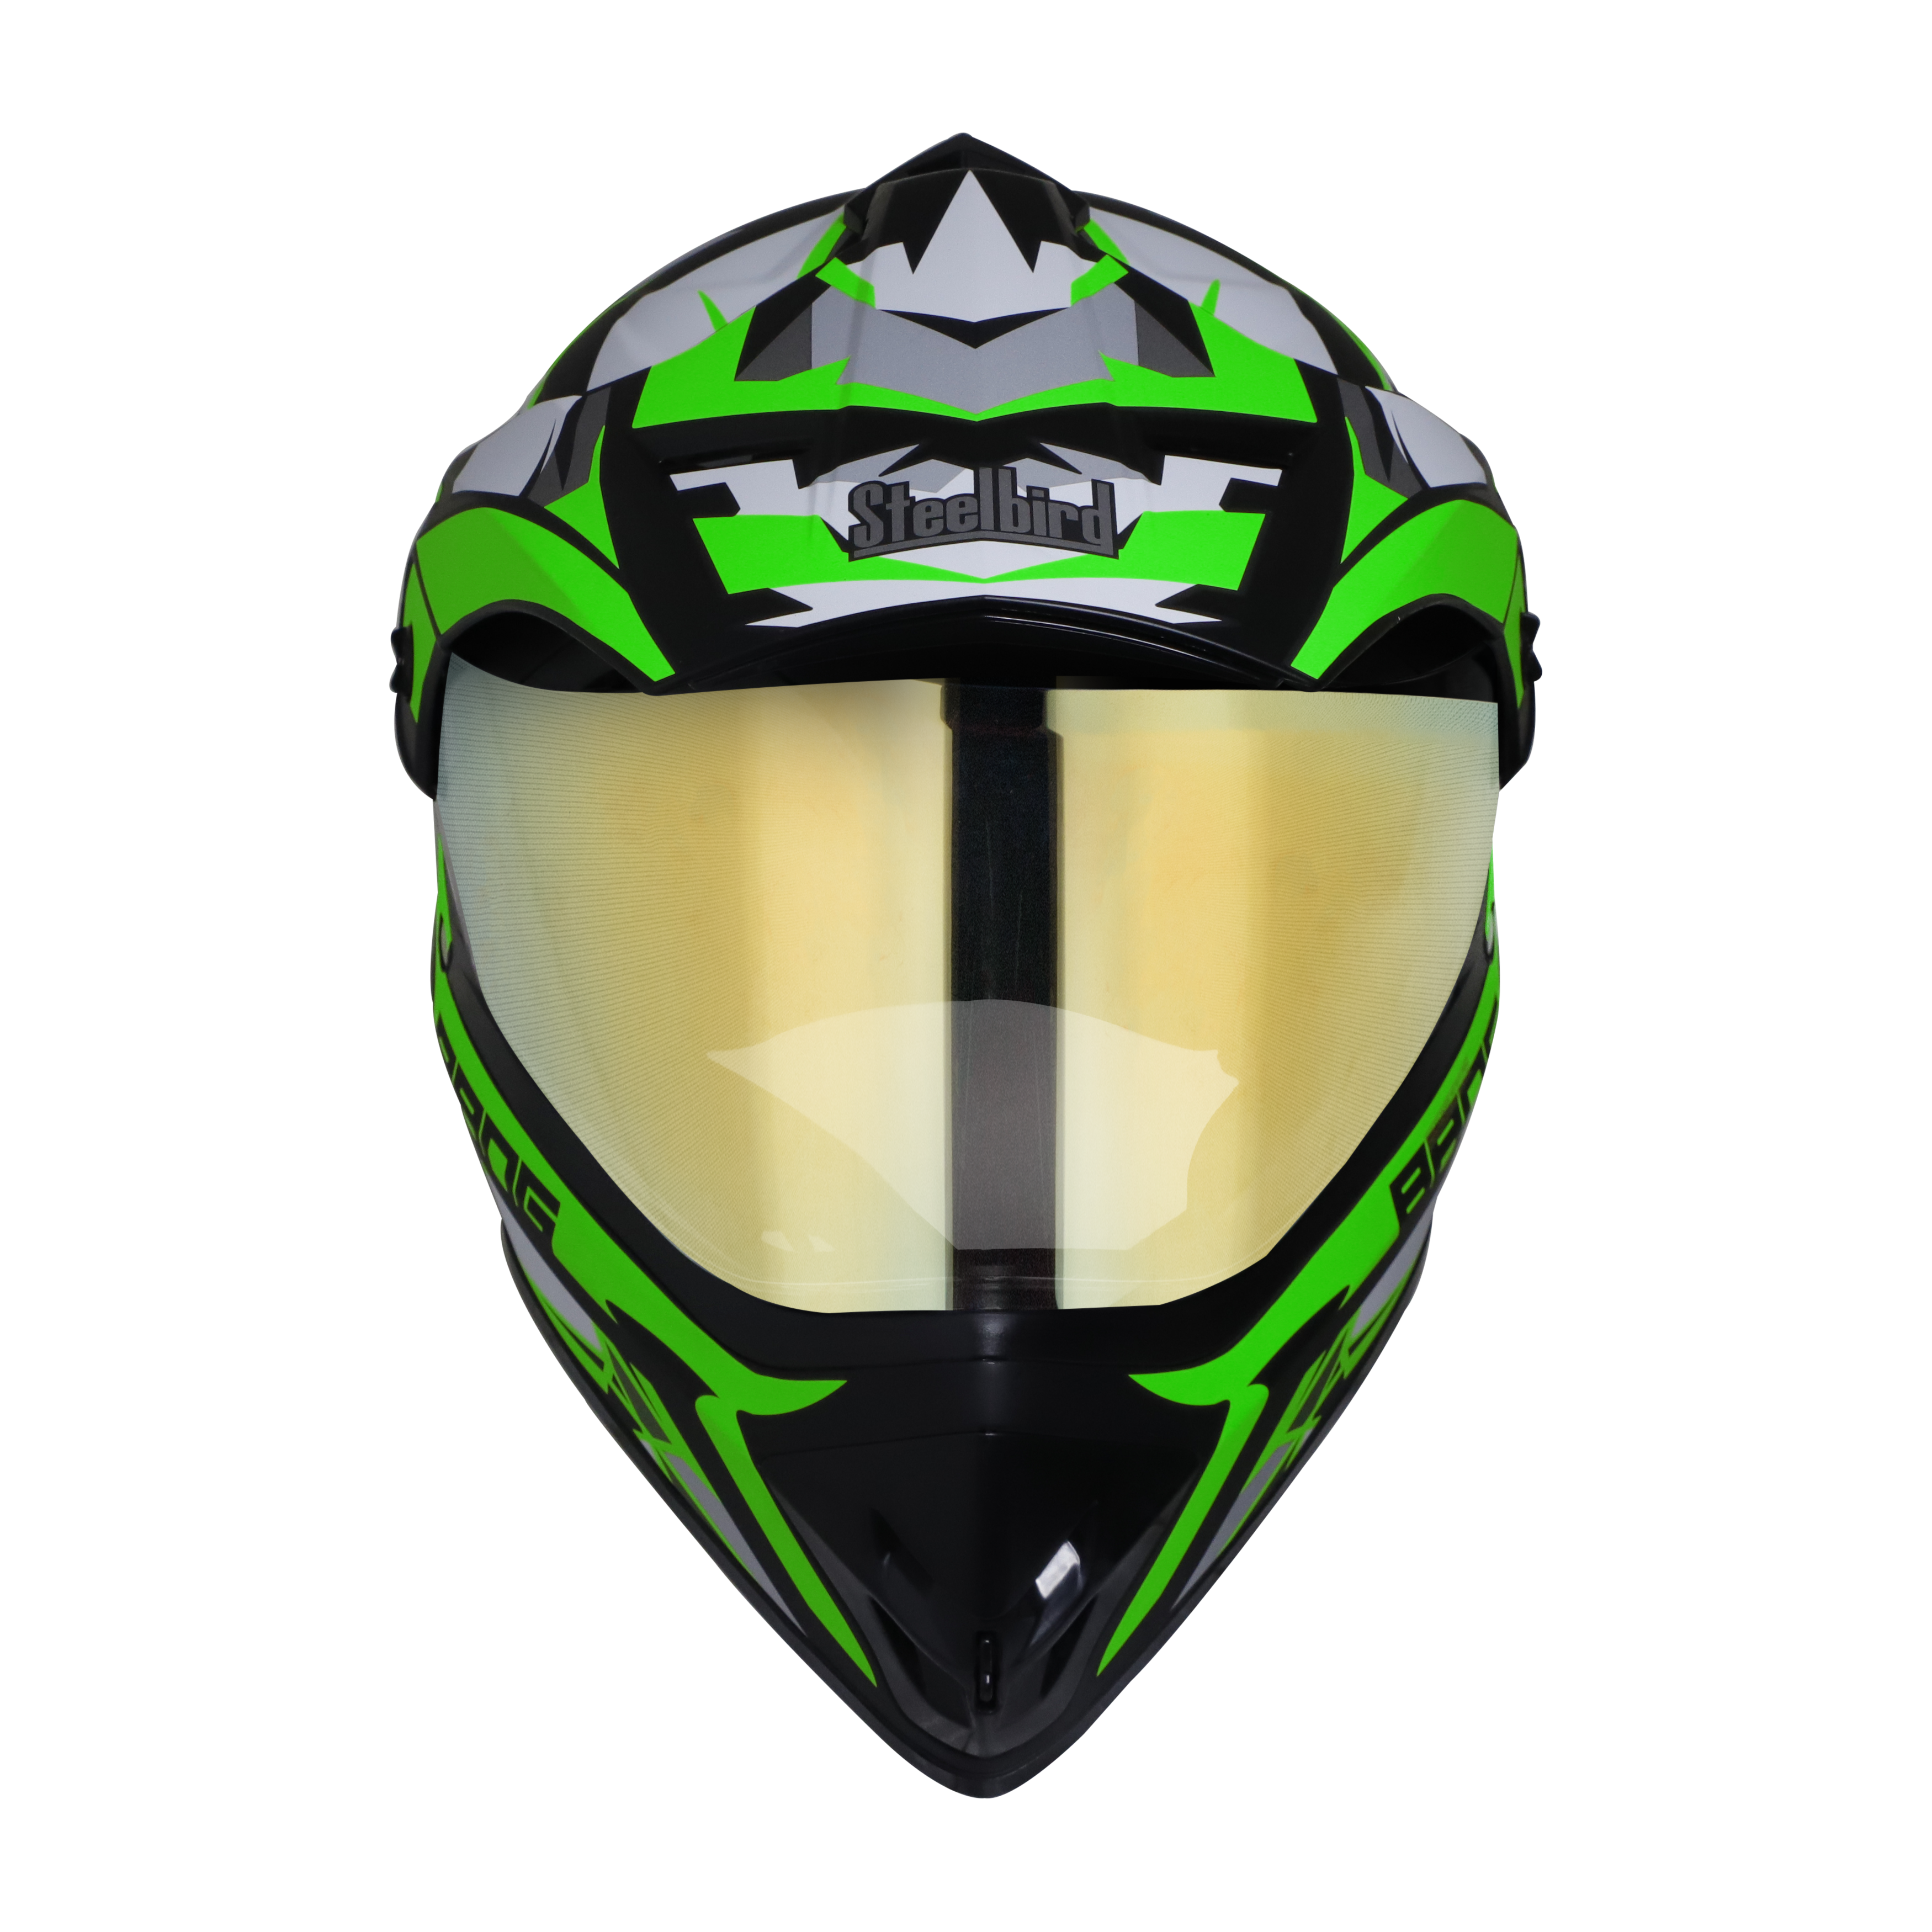 Steelbird Off Road Bang KTN ISI Certified ABS Material Shell Motocross Helmet (Matt Black Green With Chrome Gold Visor)